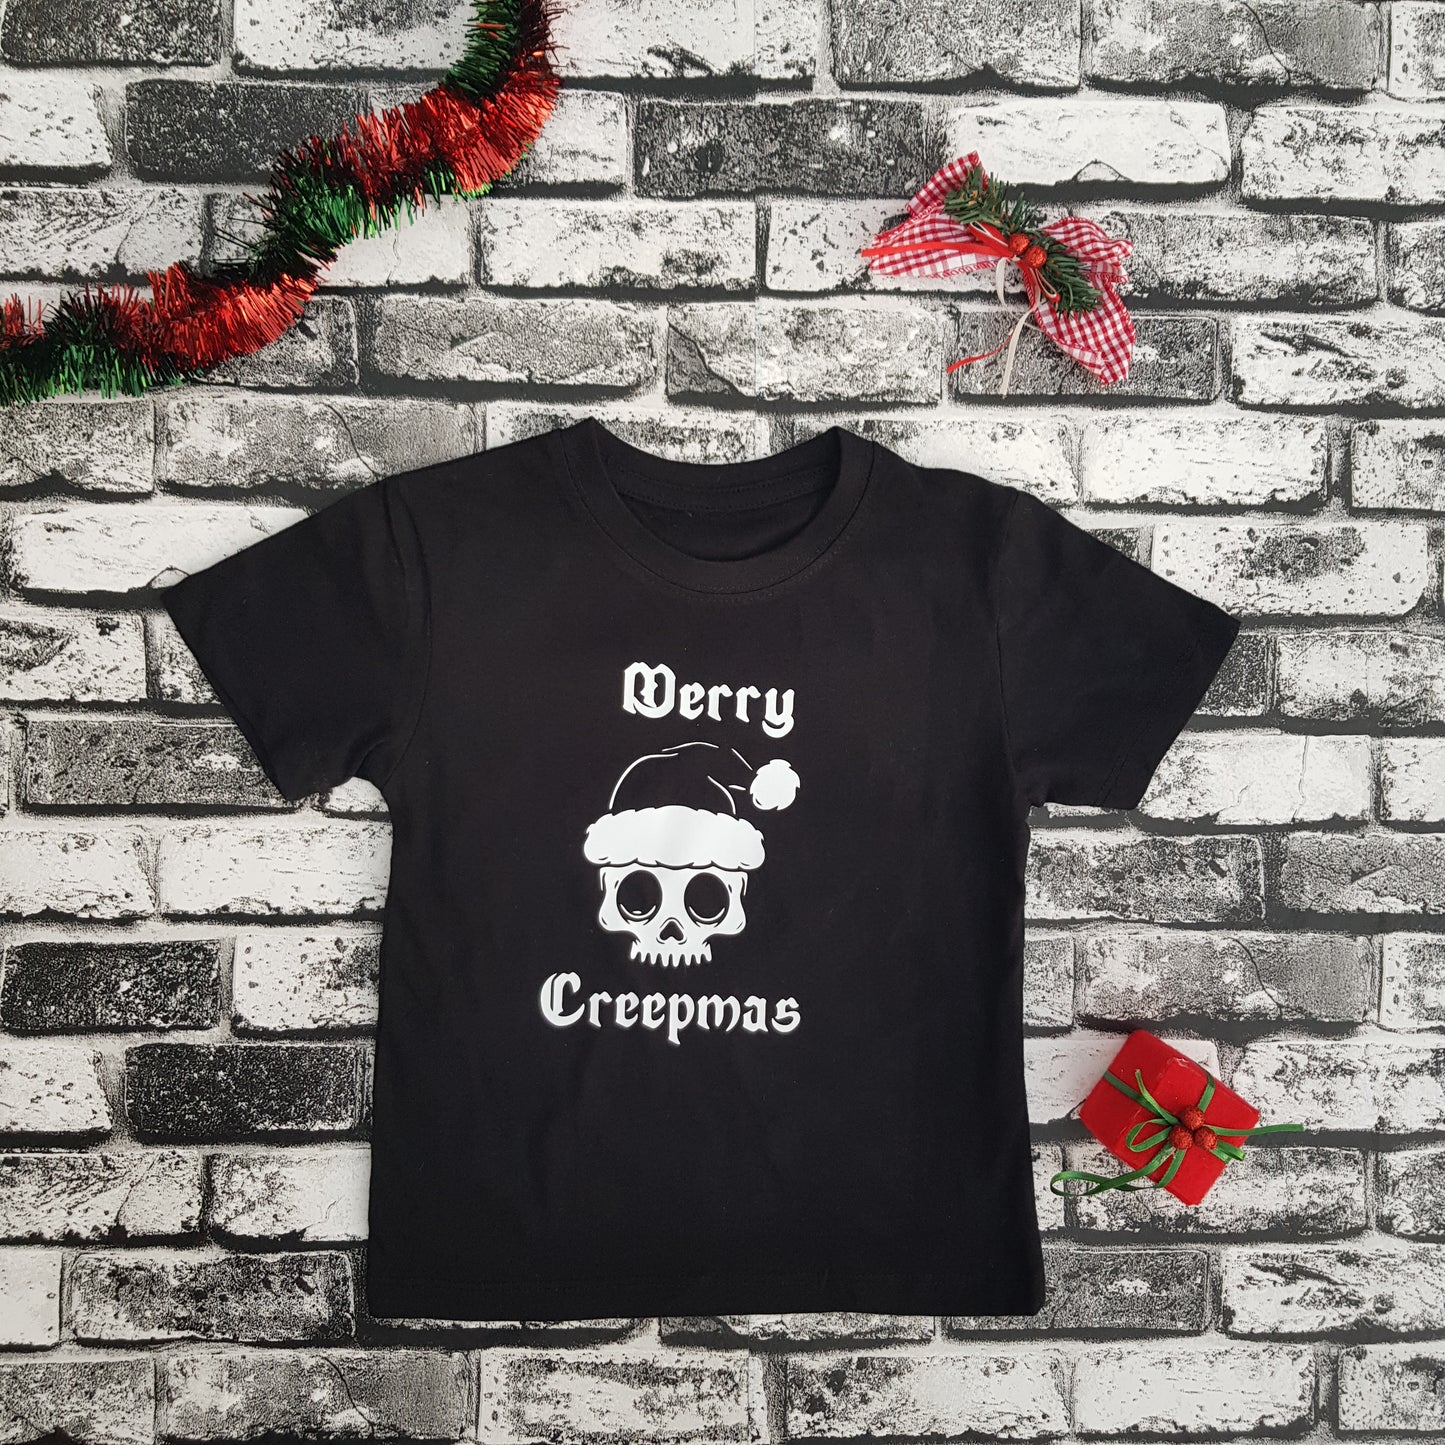 T-Shirt "Merry Creepmas"